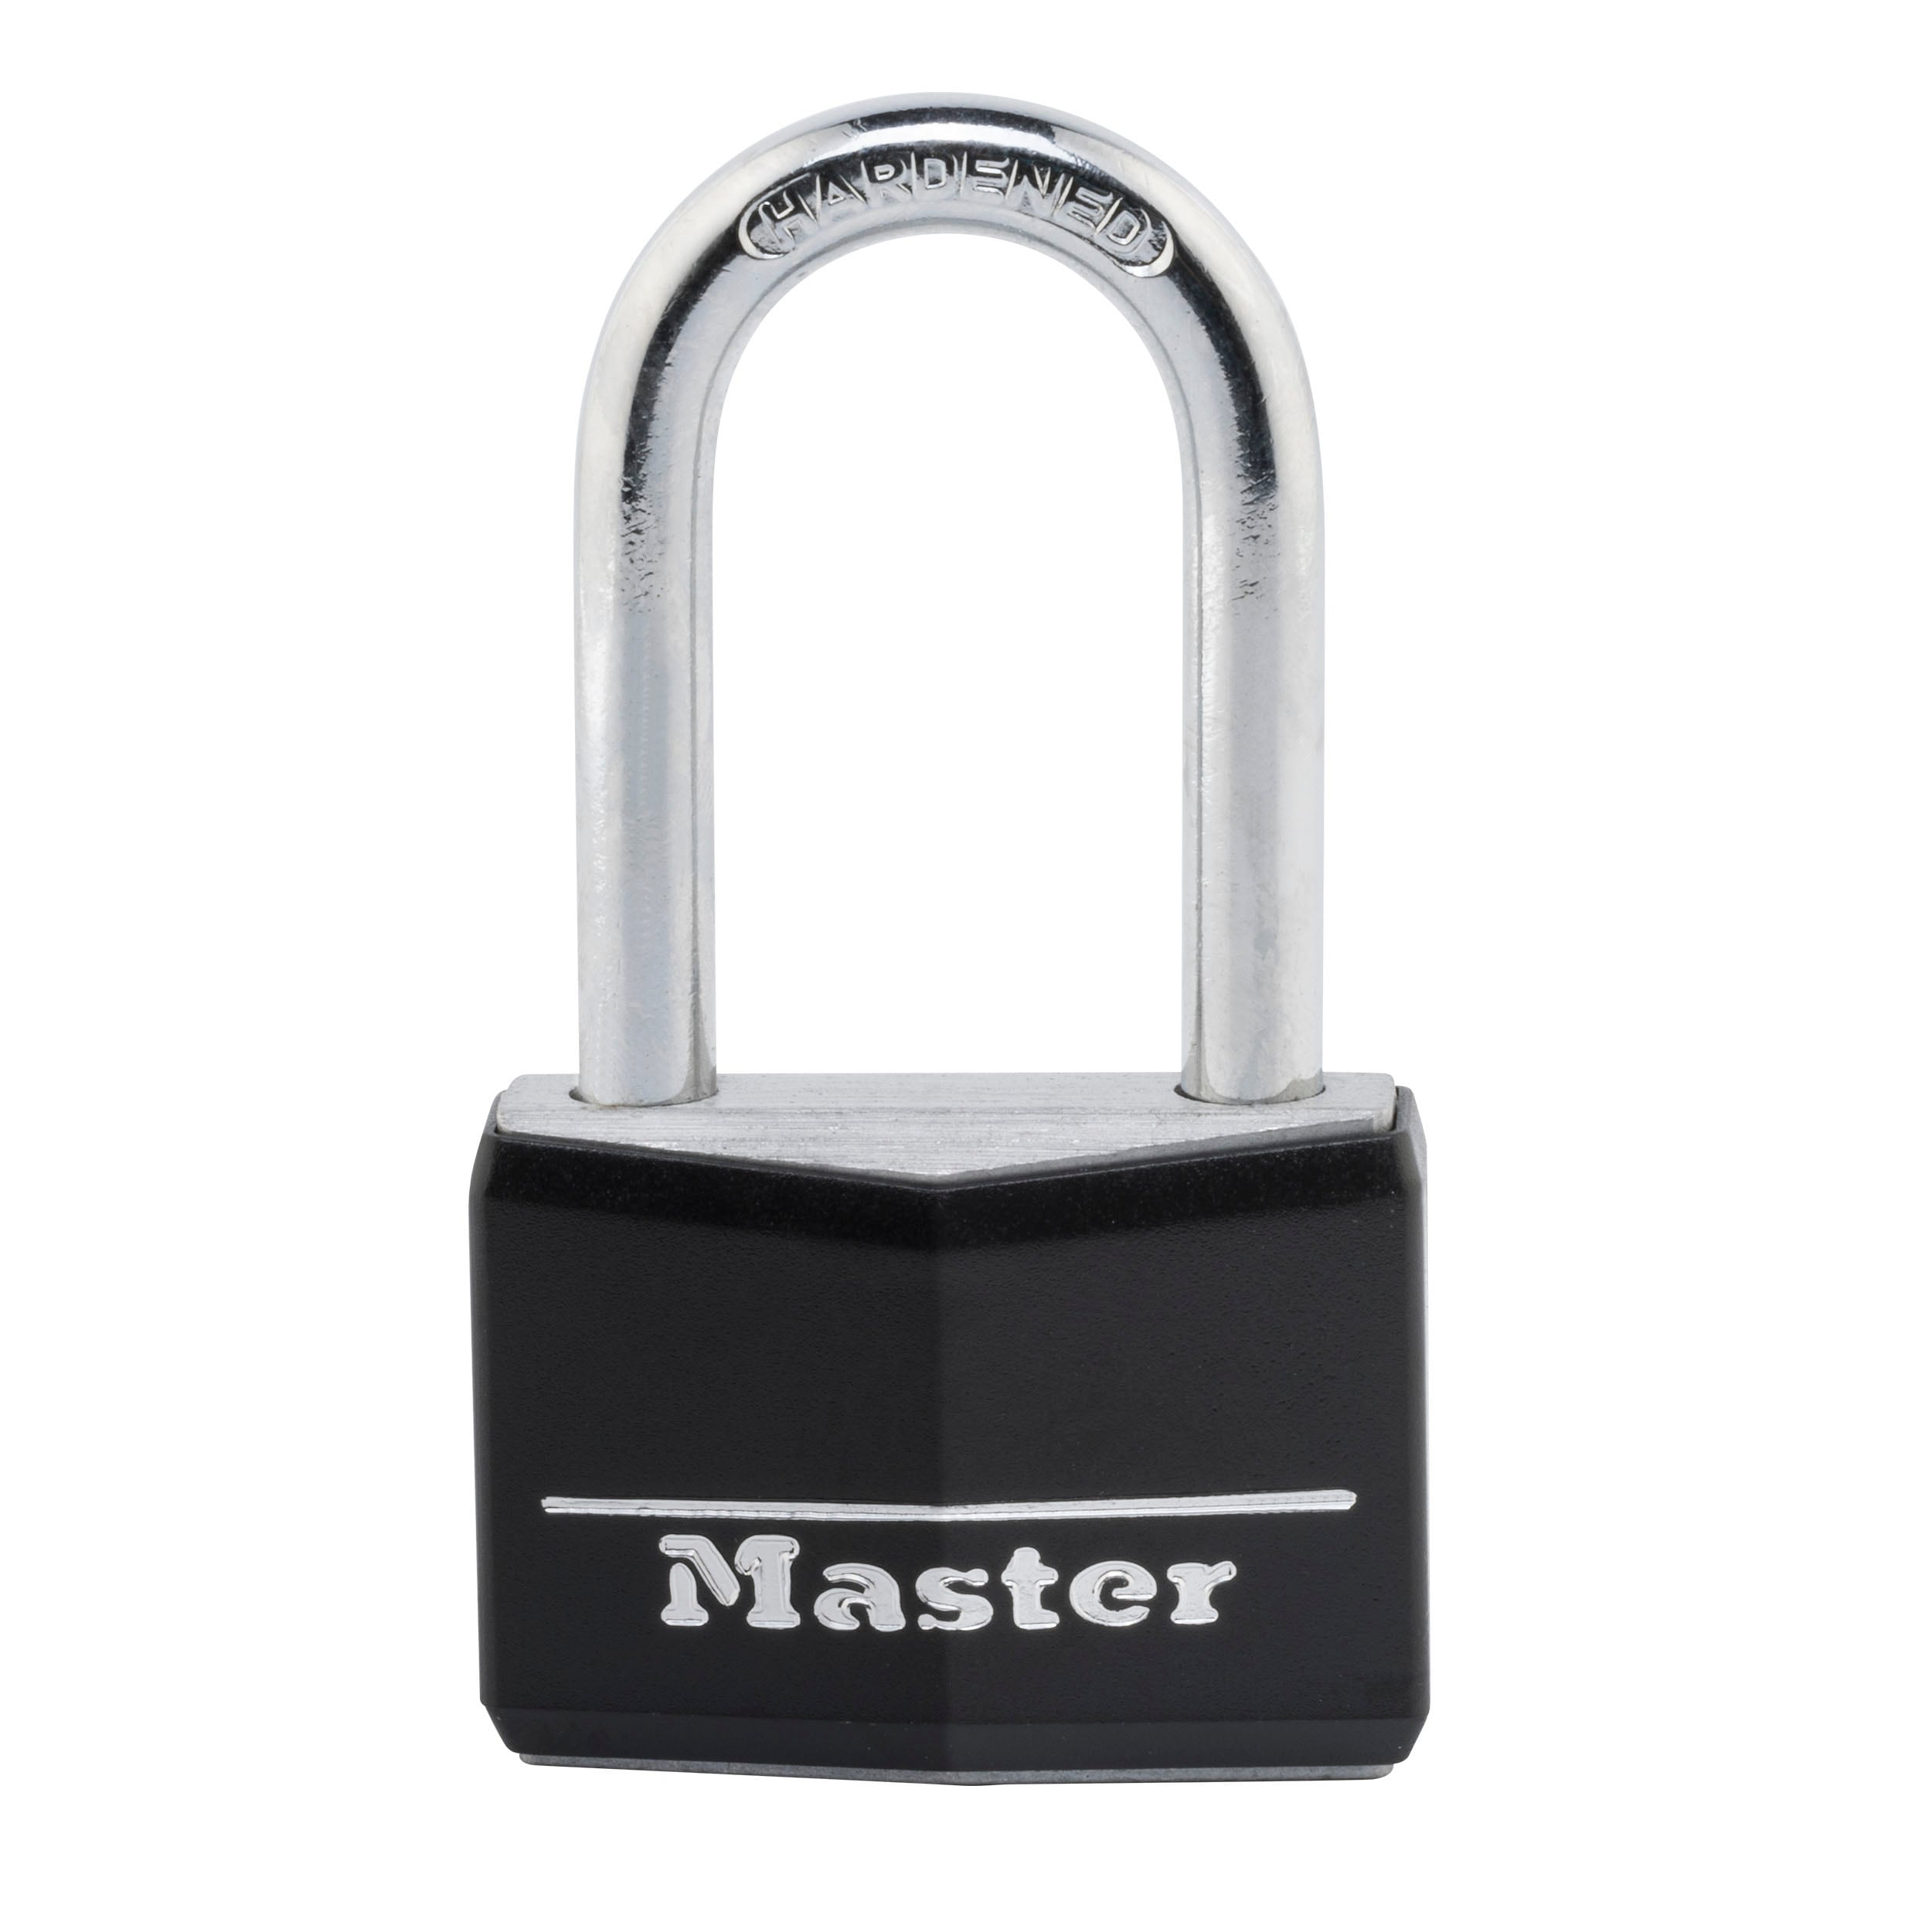 Heldig Combination Cam Locks Security Locks Bright Chrome Zinc